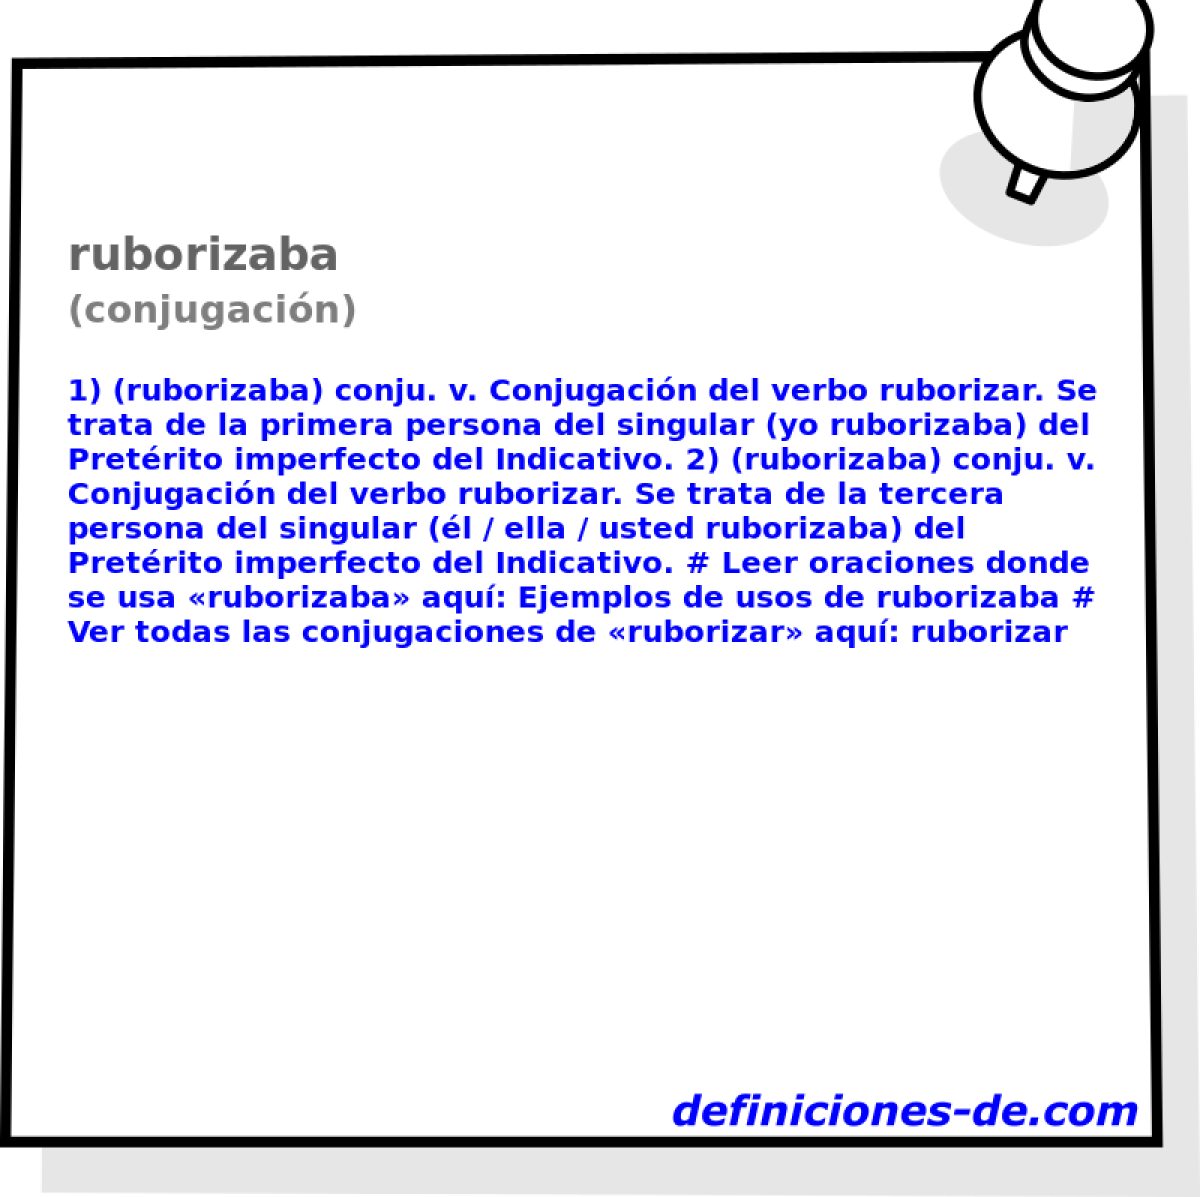 ruborizaba (conjugacin)